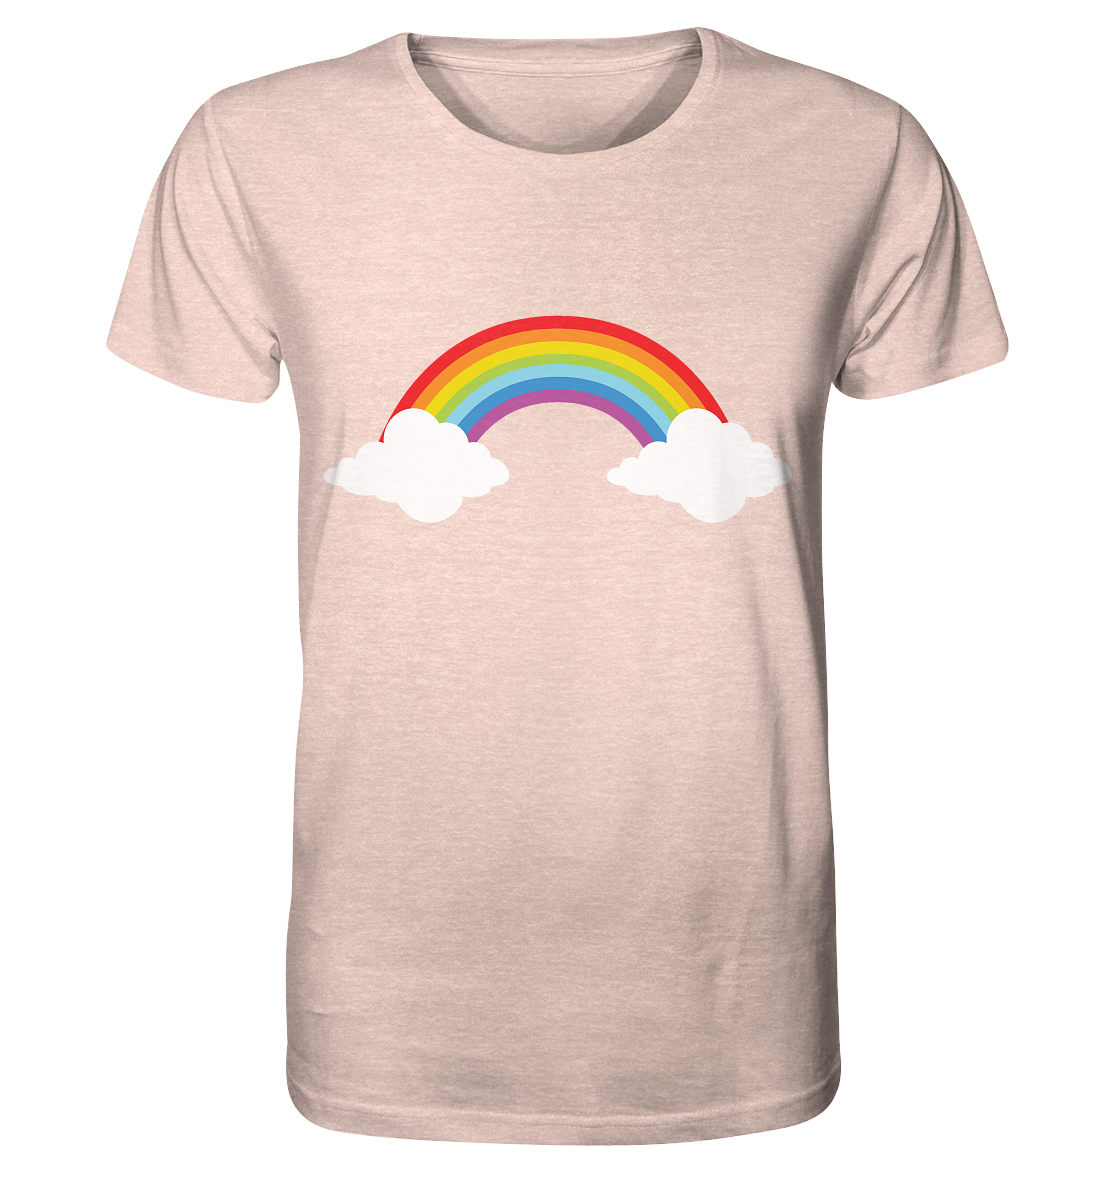 Regenbogen mit Wolken  - Organic Shirt (meliert)